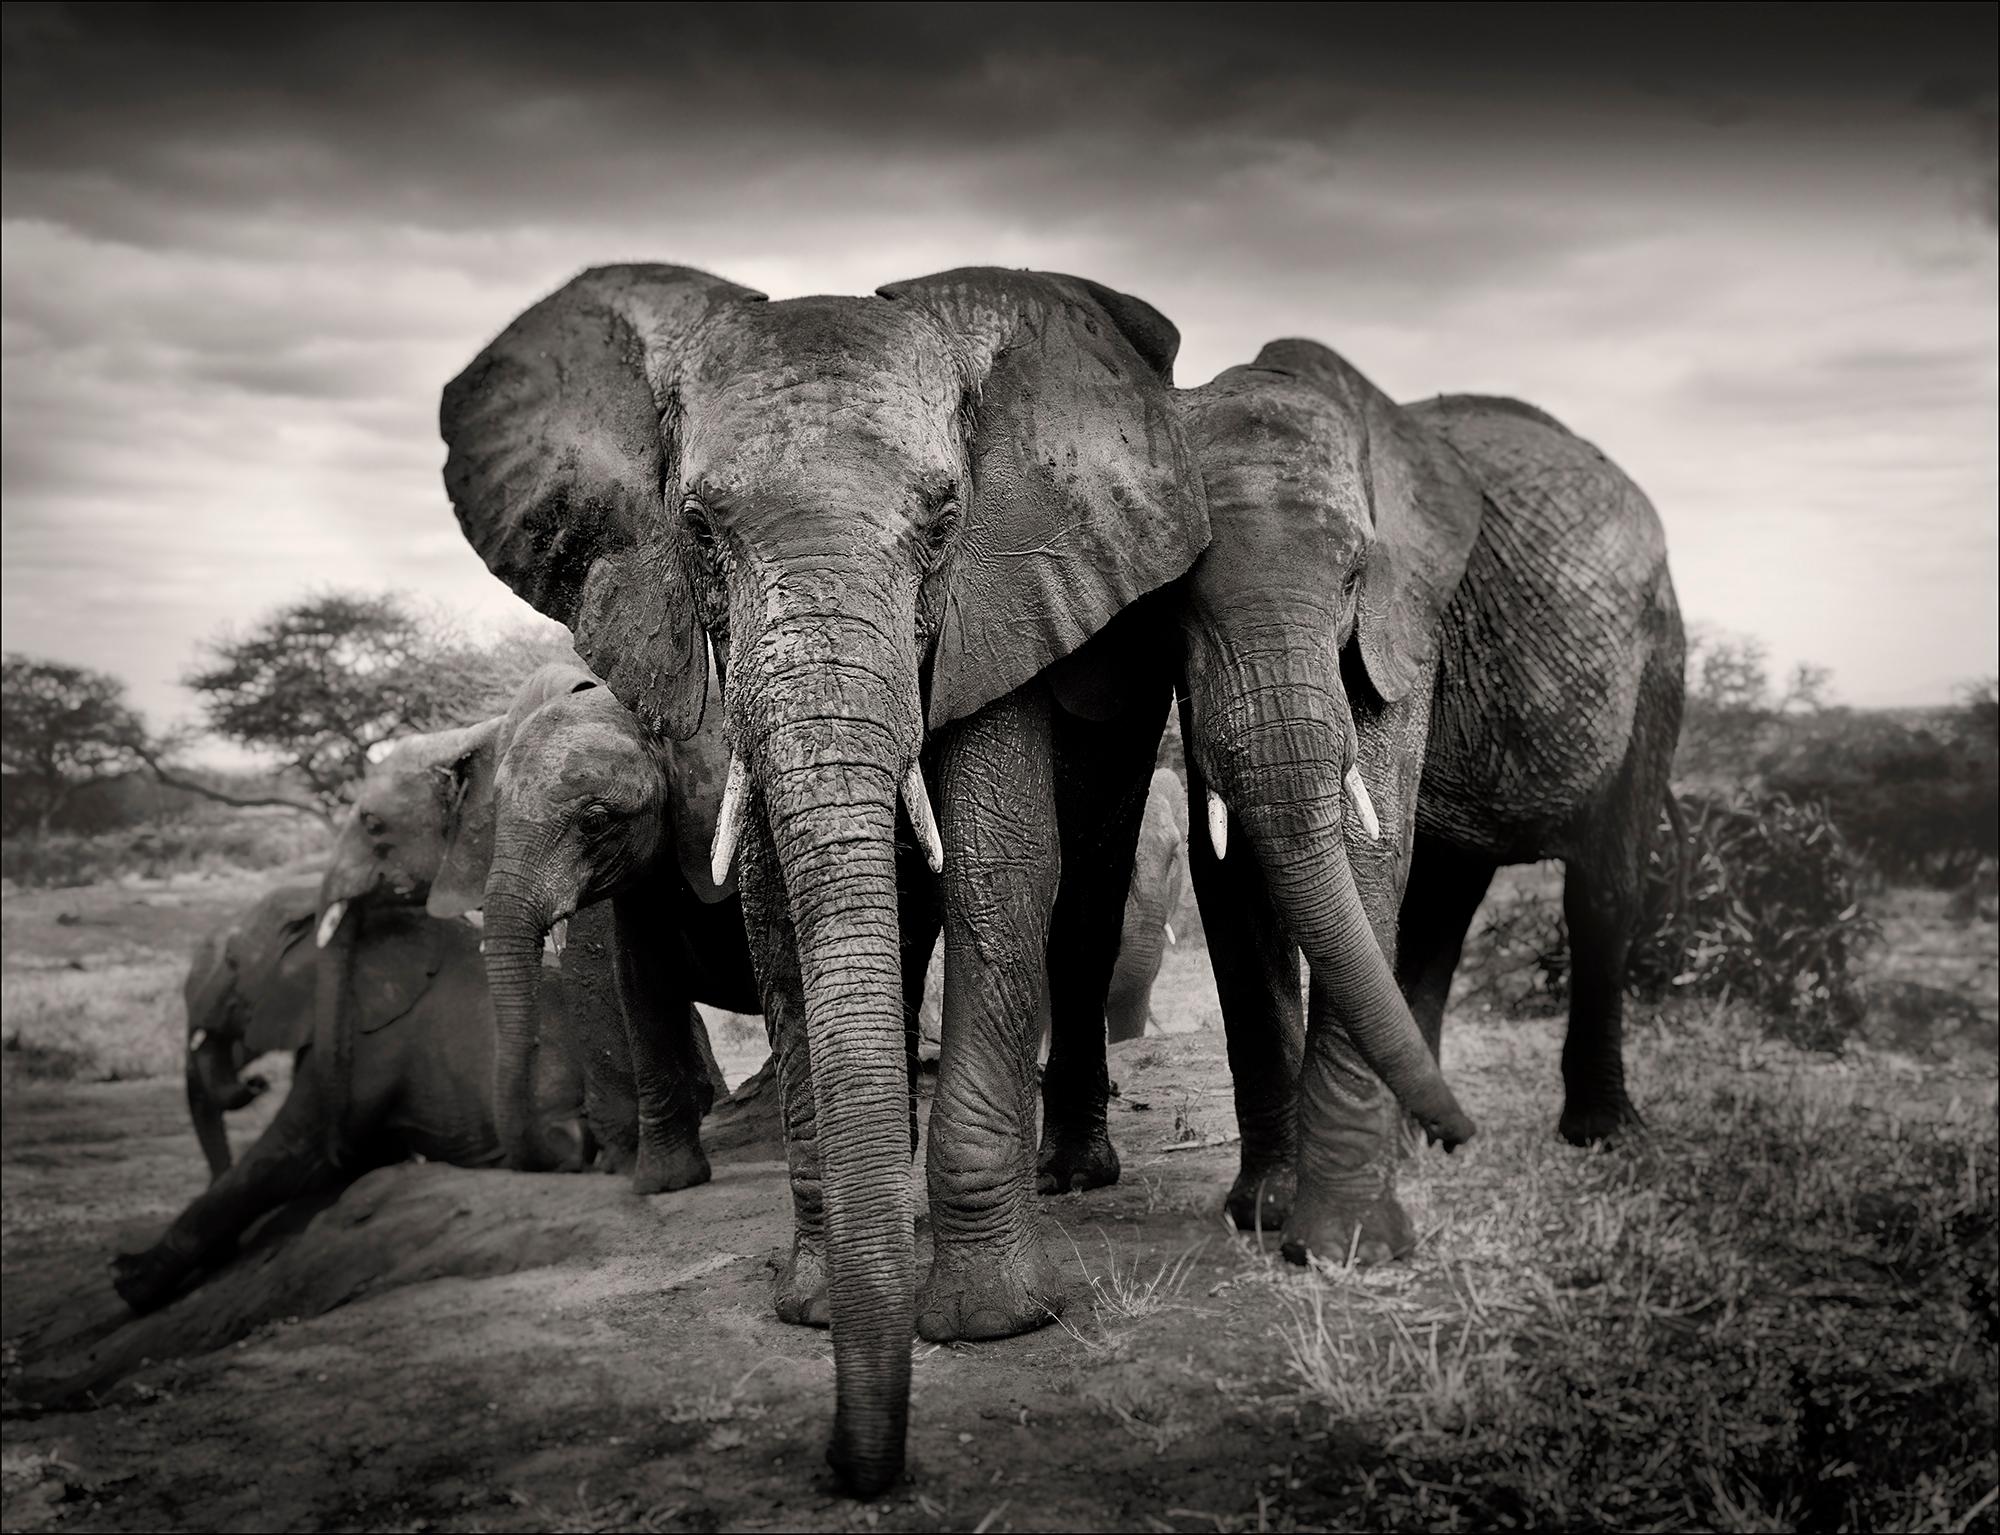 Joachim Schmeisser Portrait Photograph - The magnificent Seven - Platinum, animal, elephant, black and white photography